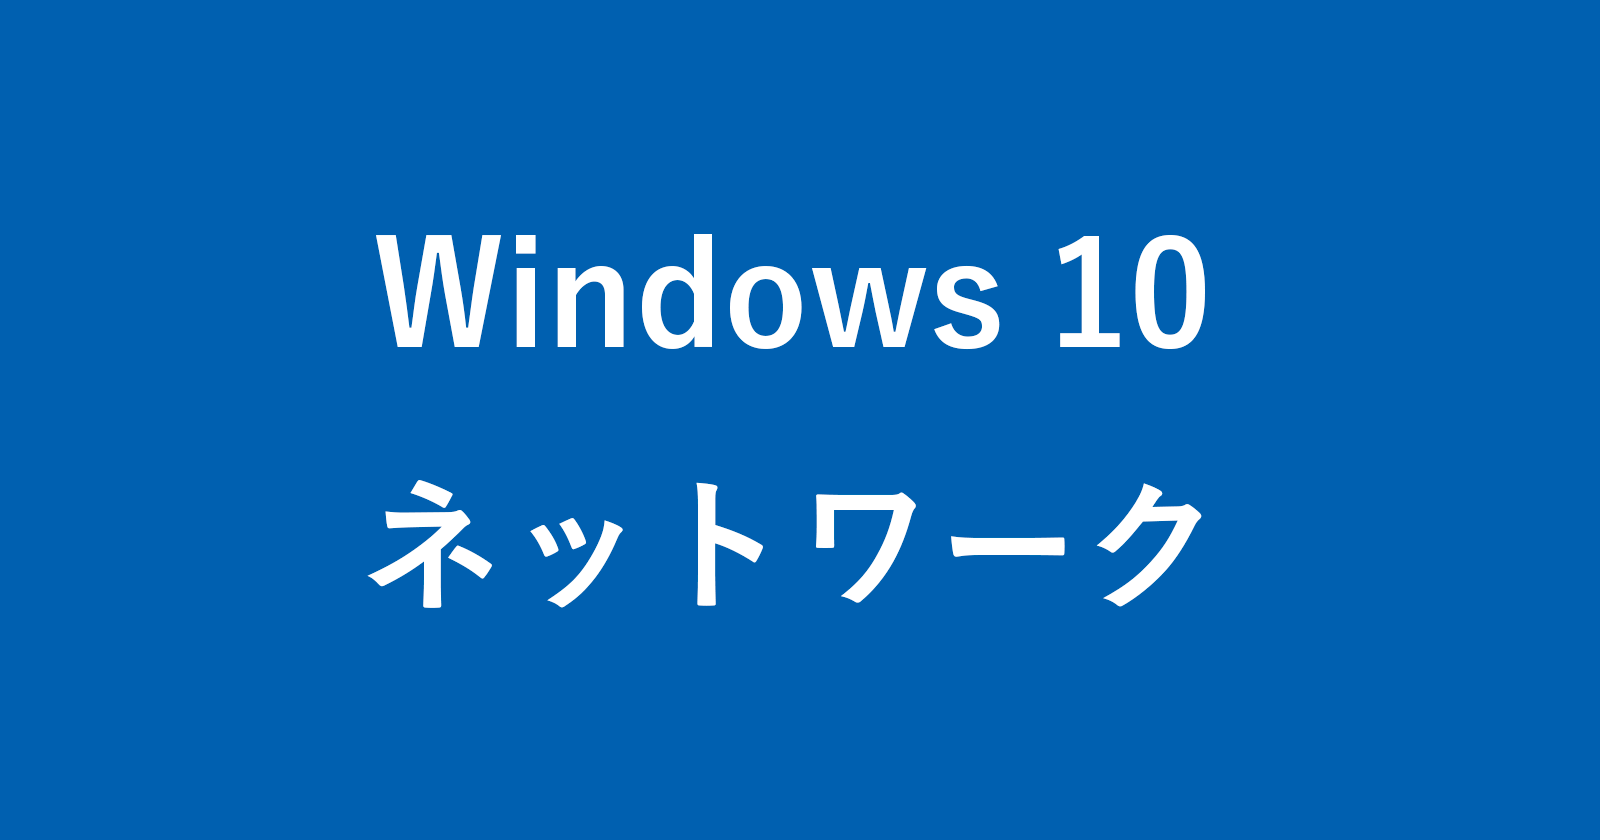 windows 10 network